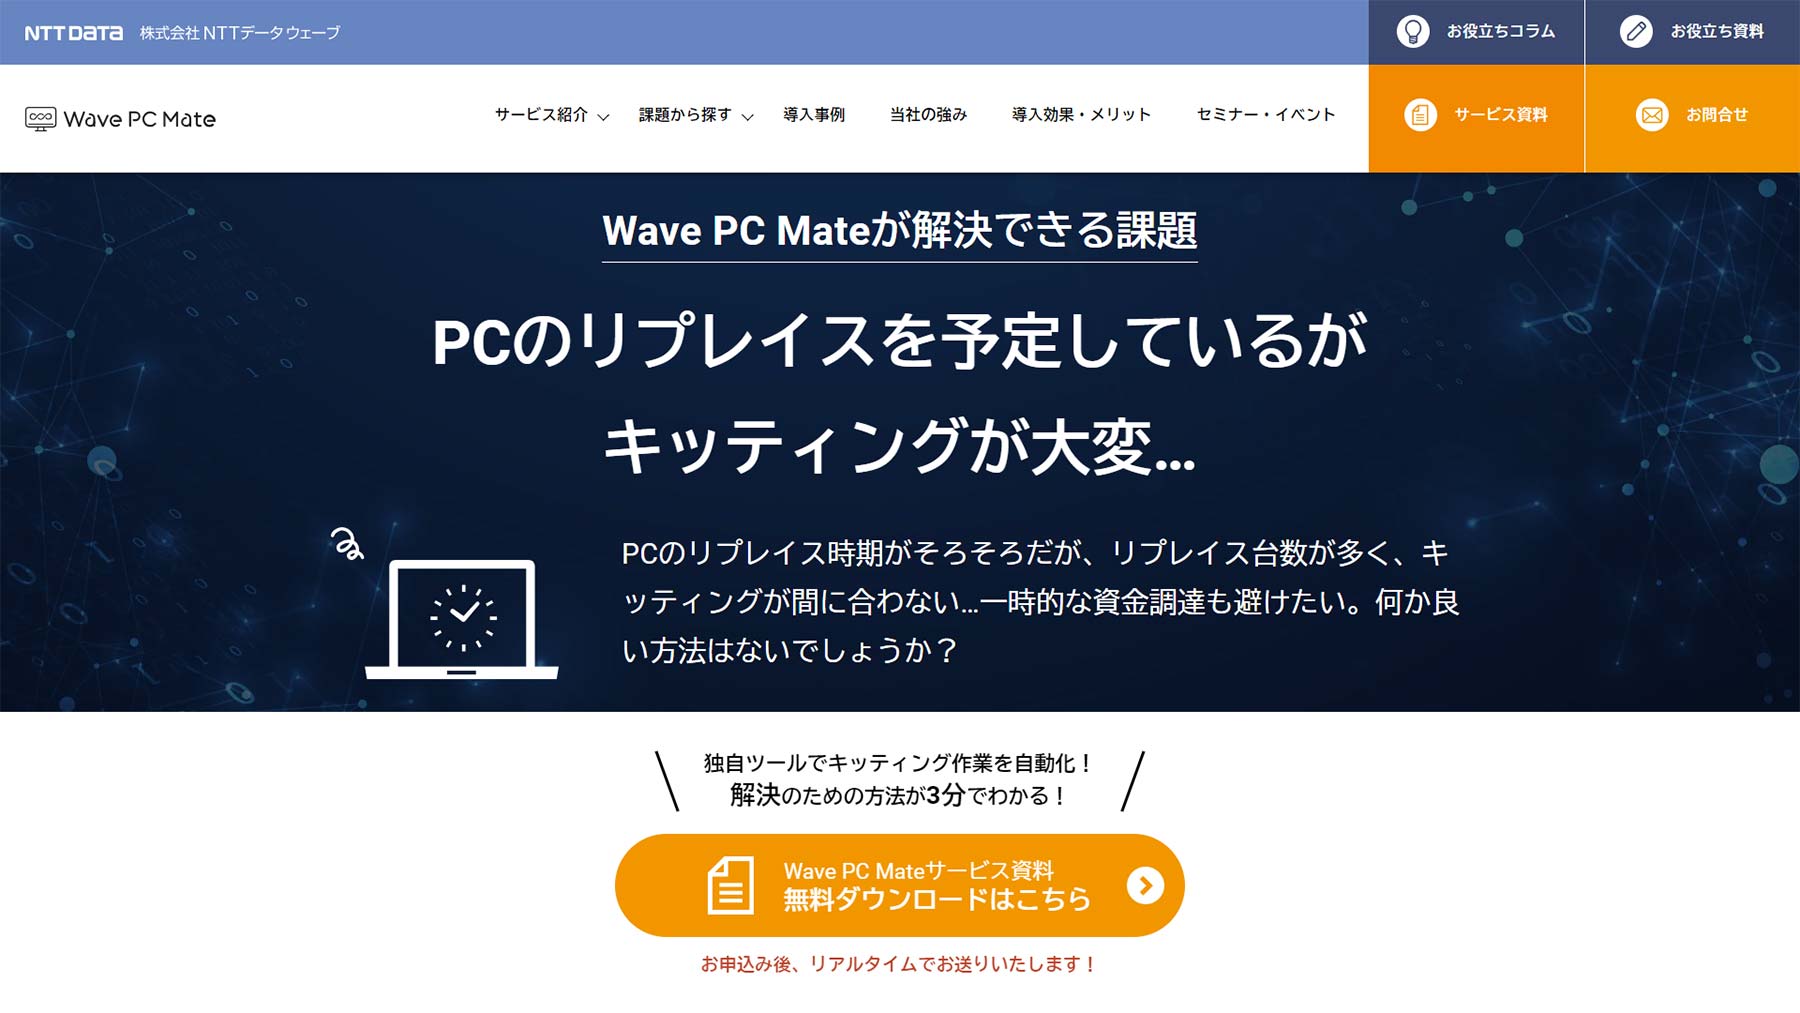 Wave PC Mate公式Webサイト